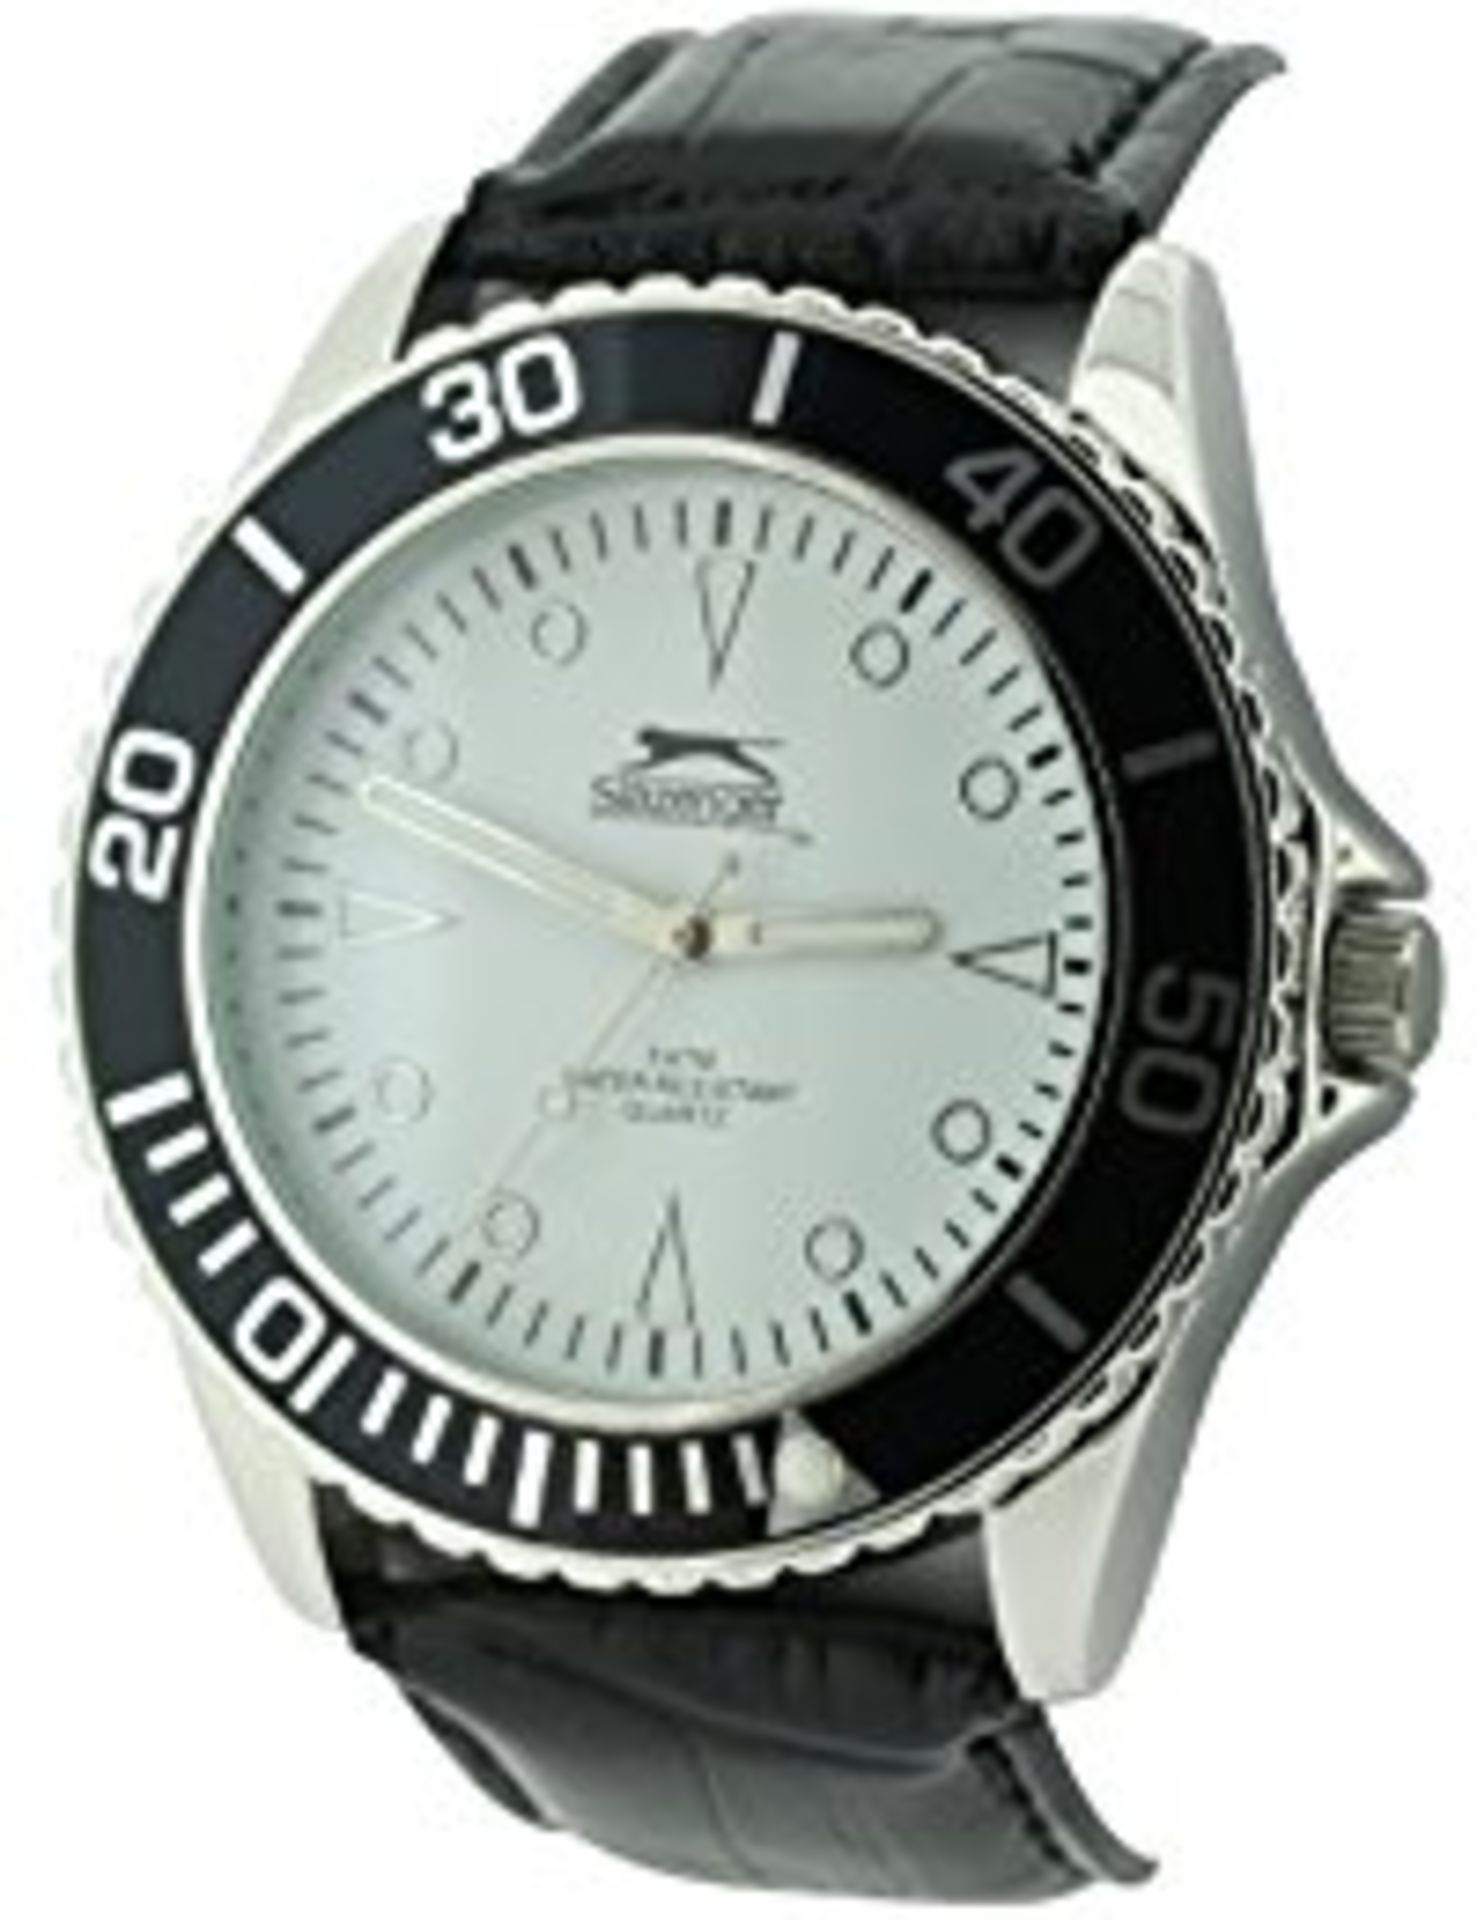 V Brand New Gents Slazenger Quartz Watch - White Dial Analogue Display & Black PU Strap X 2 YOUR BID